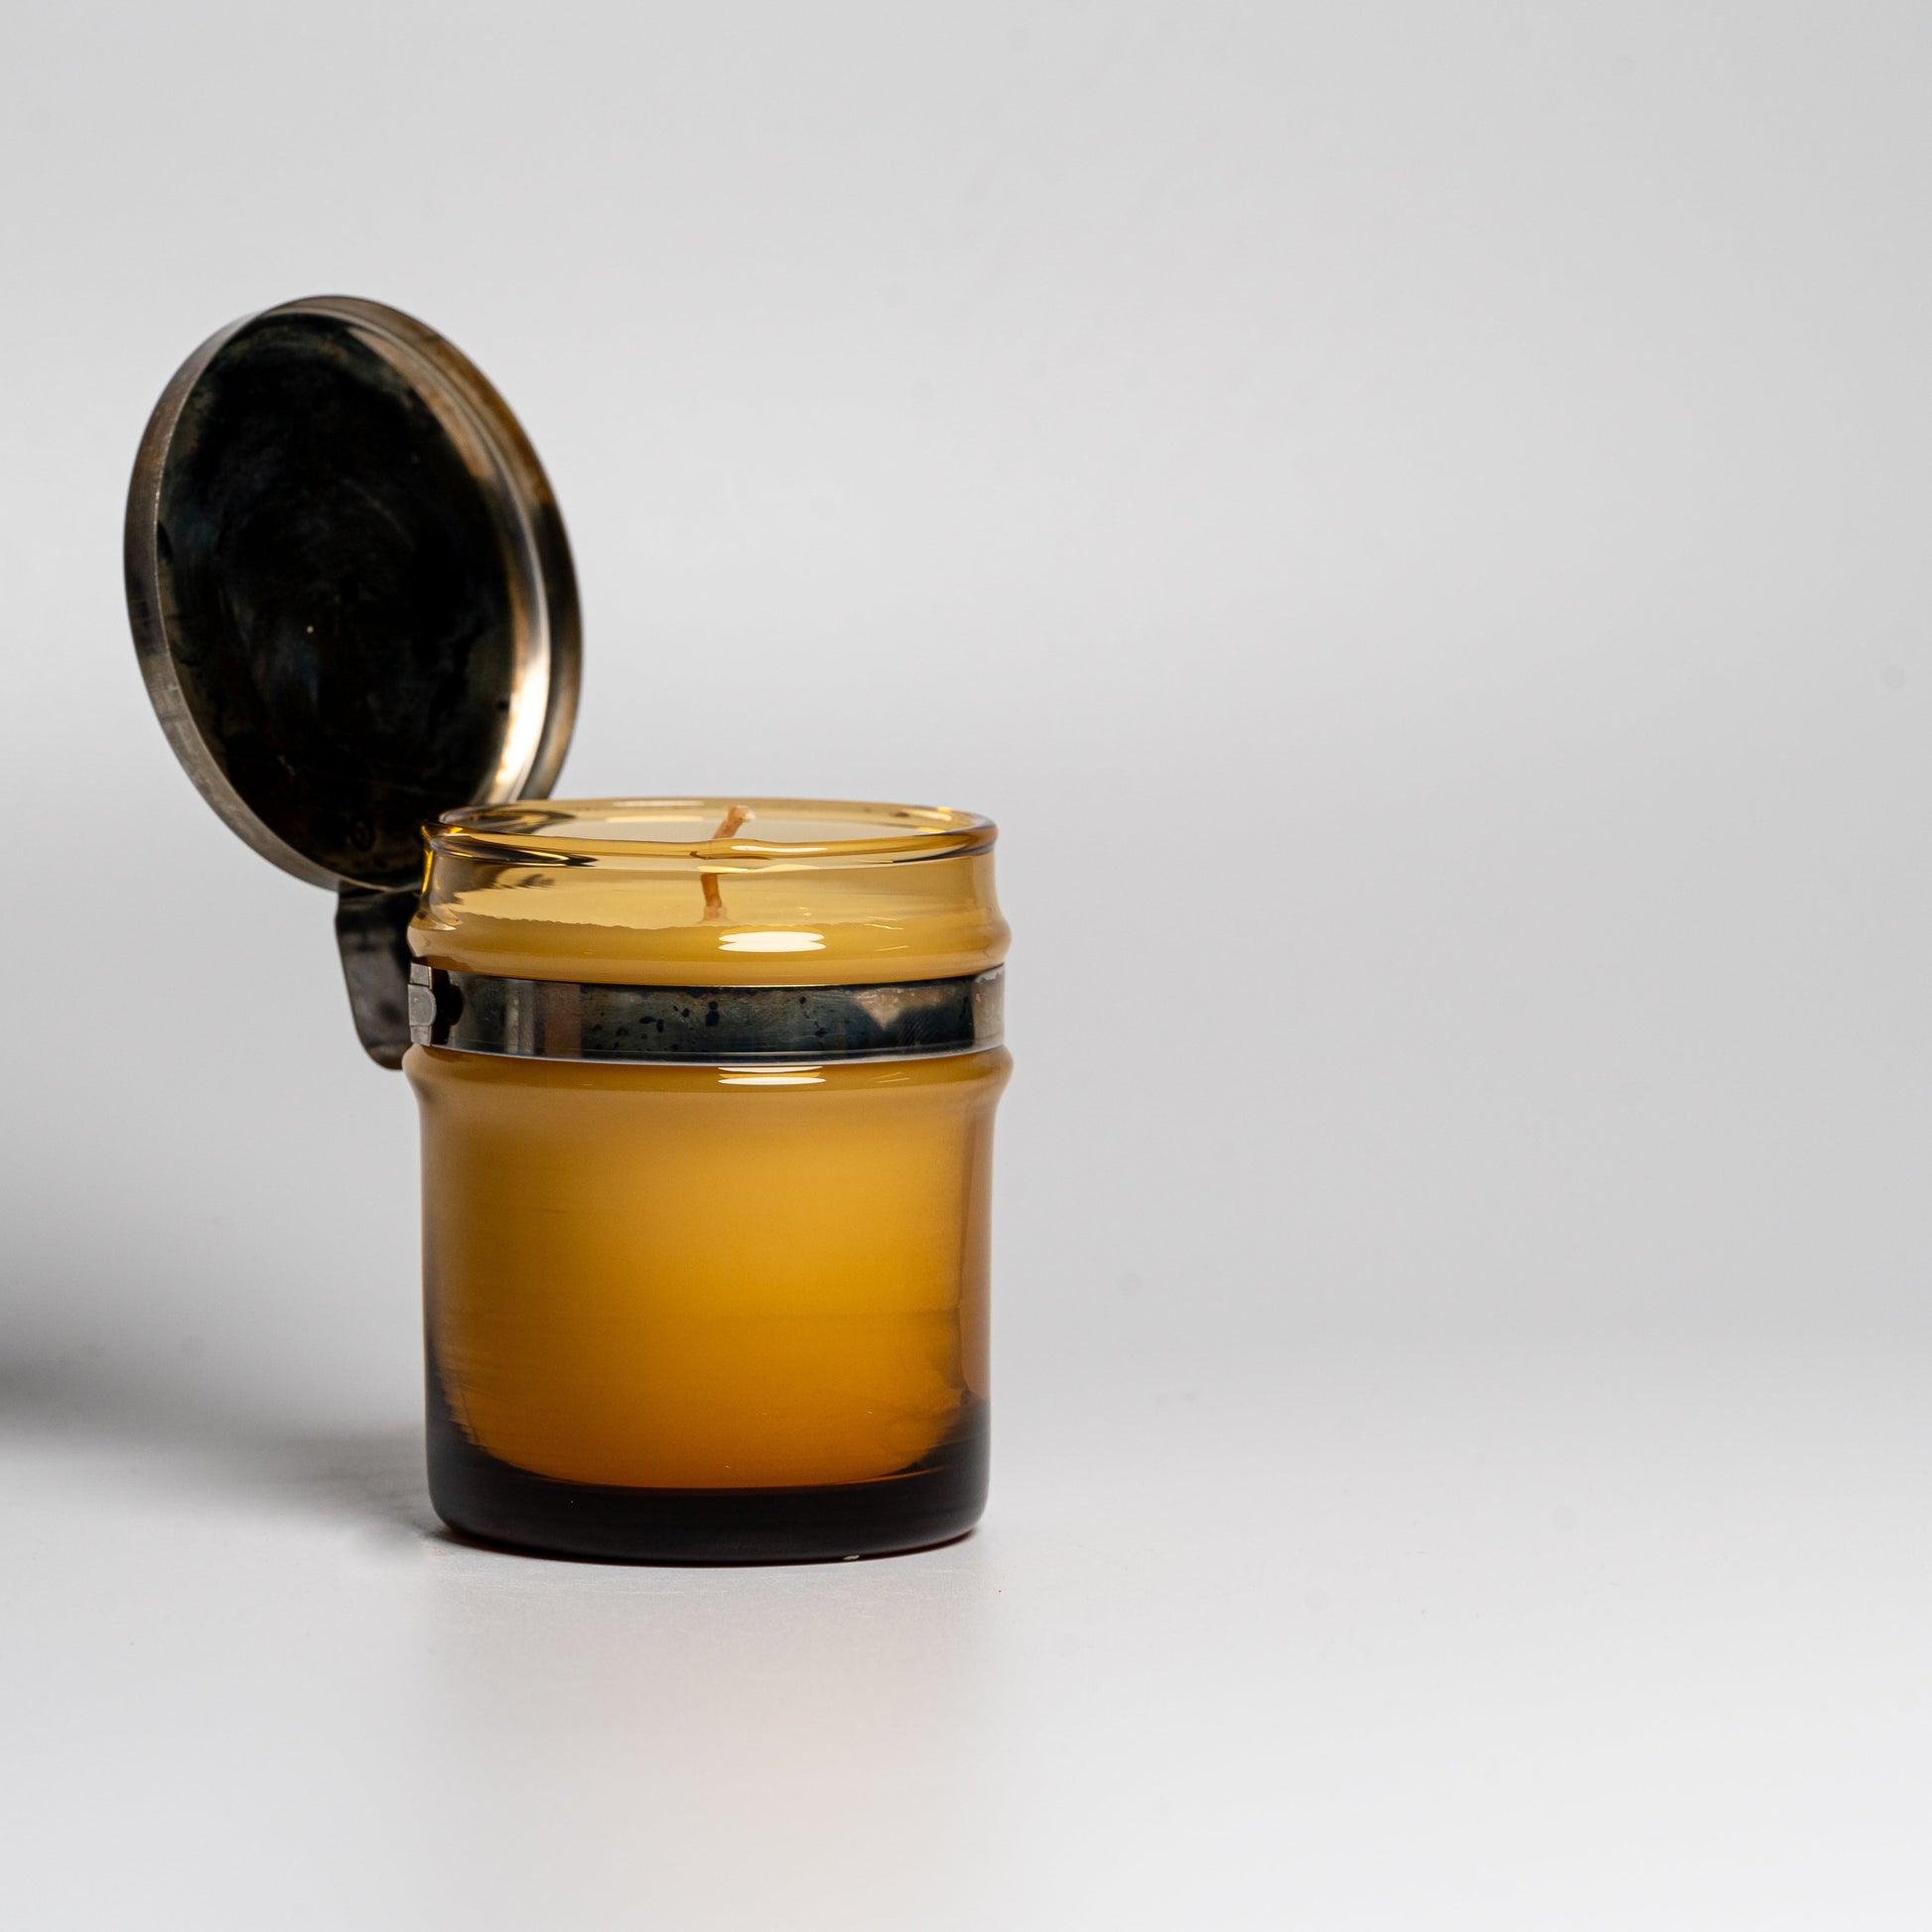 A Cul de Sac hiba wood candle in a glass jar on a white background